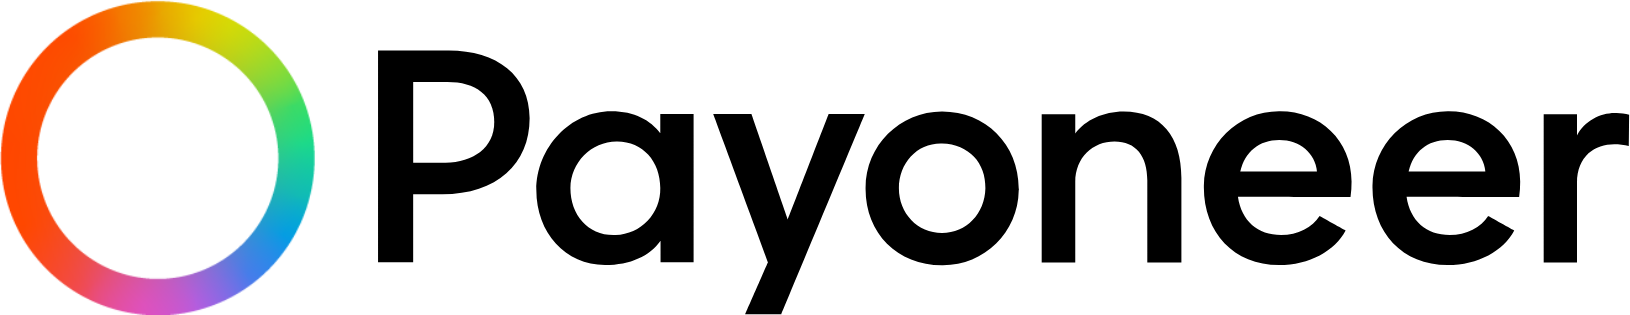 Payoneer logo large (transparent PNG)